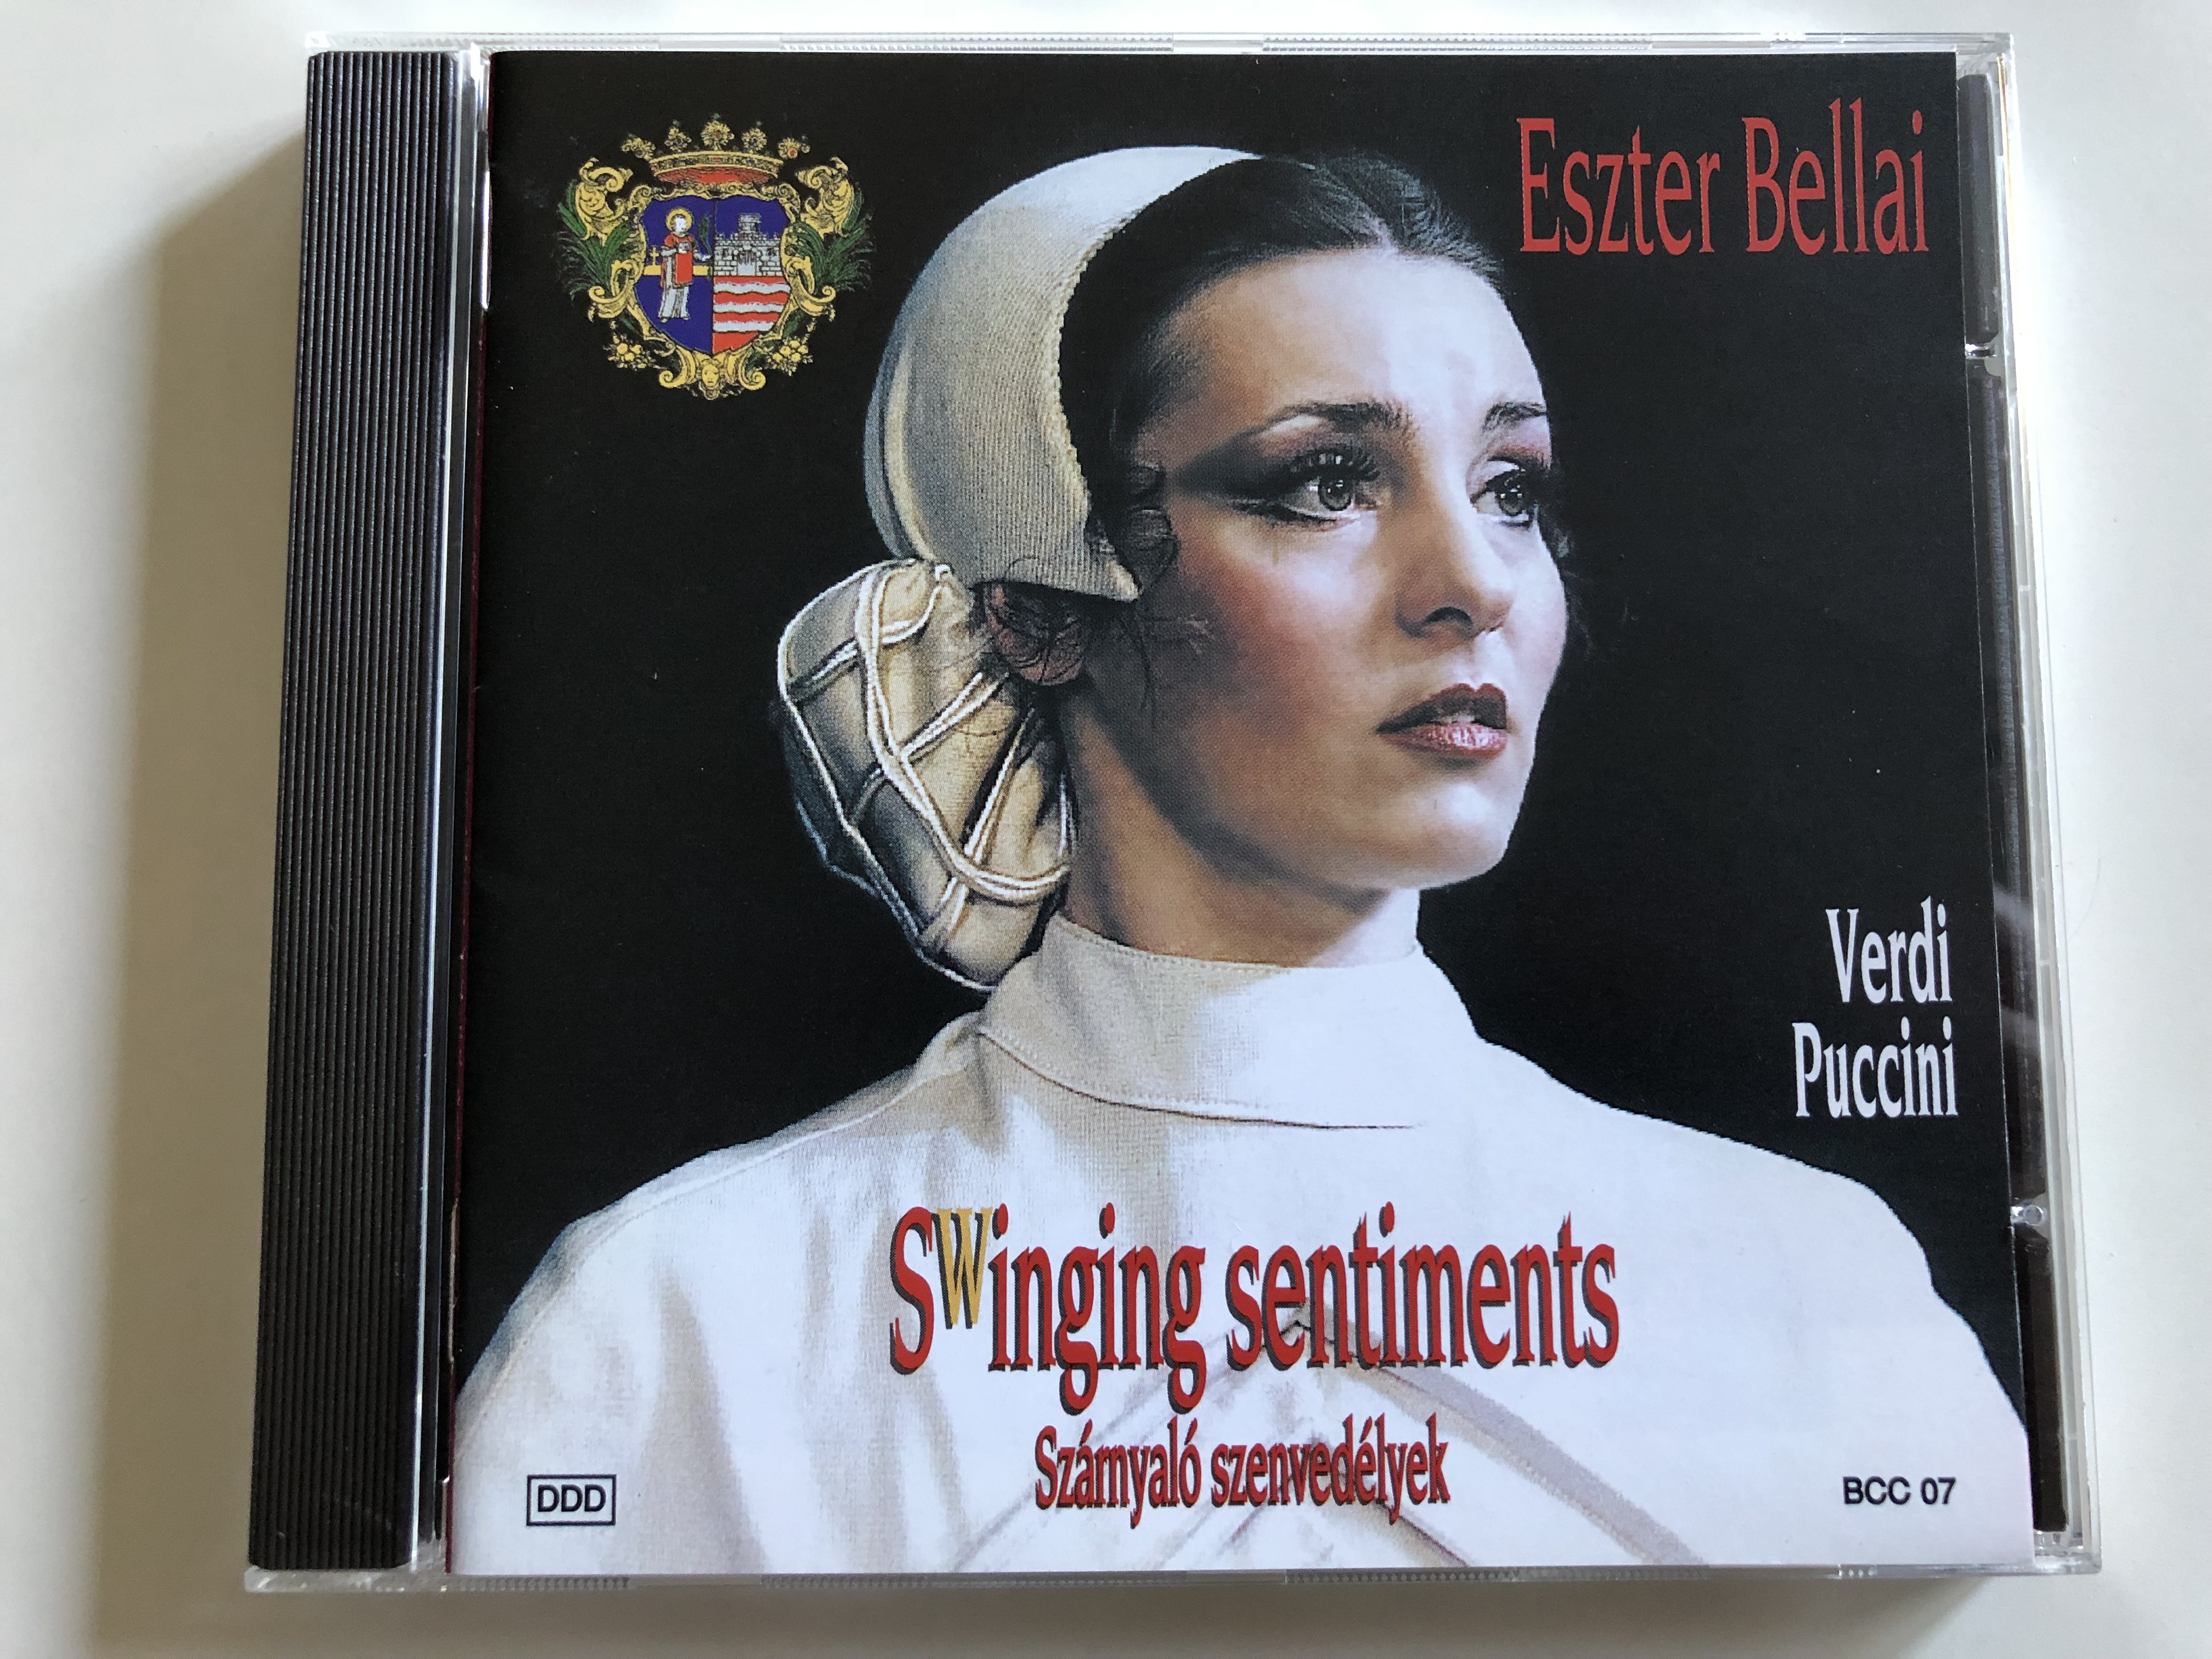 eszter-bellai-swinging-sentiments-sz-rnyal-szenved-lyek-verdi-puccini-magyar-k-nyvklub-audio-cd-stereo-bcc-07-1-.jpg